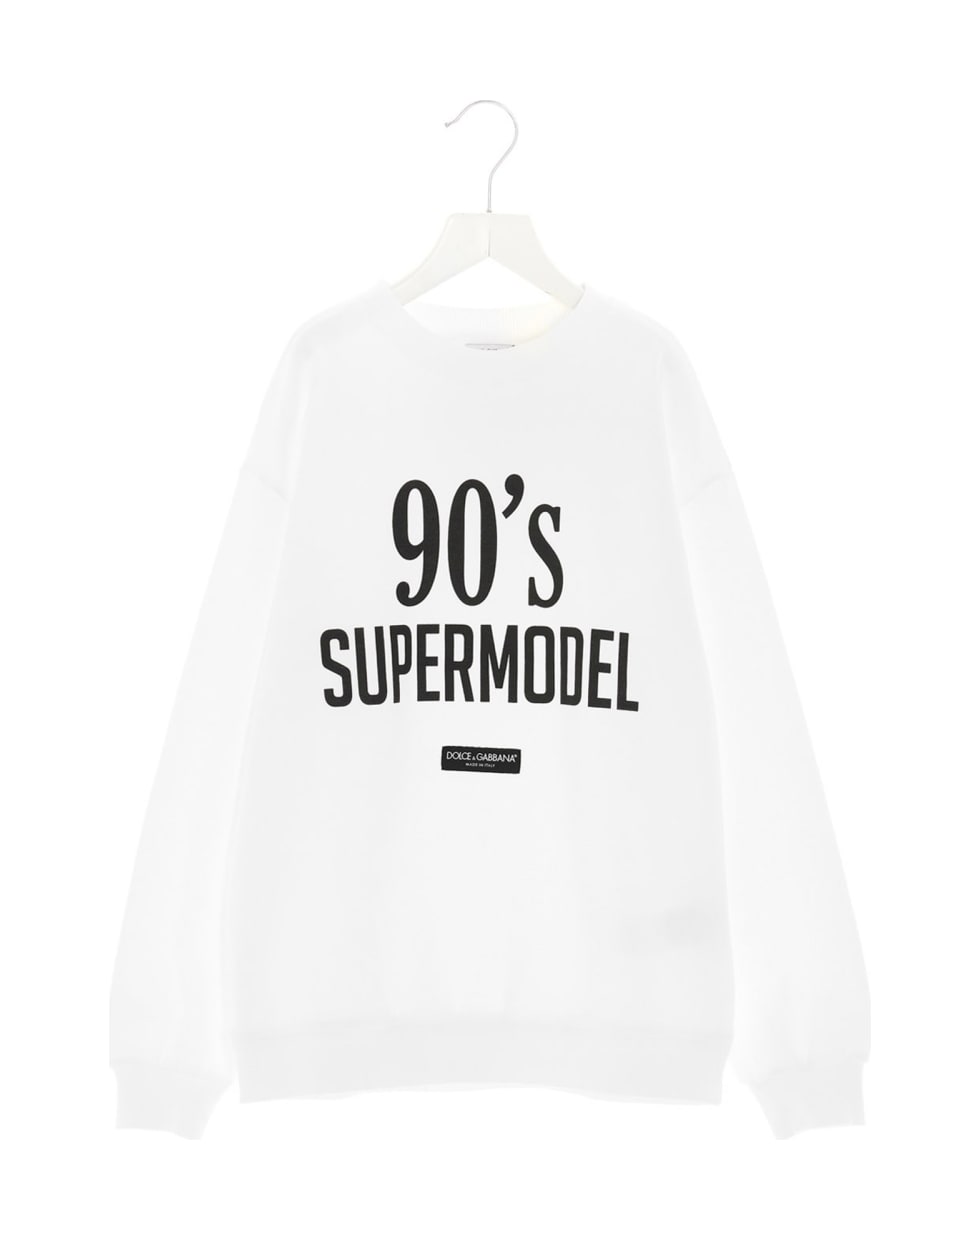 Dolce & Gabbana '90s Supermodel' Sweatshirt - White